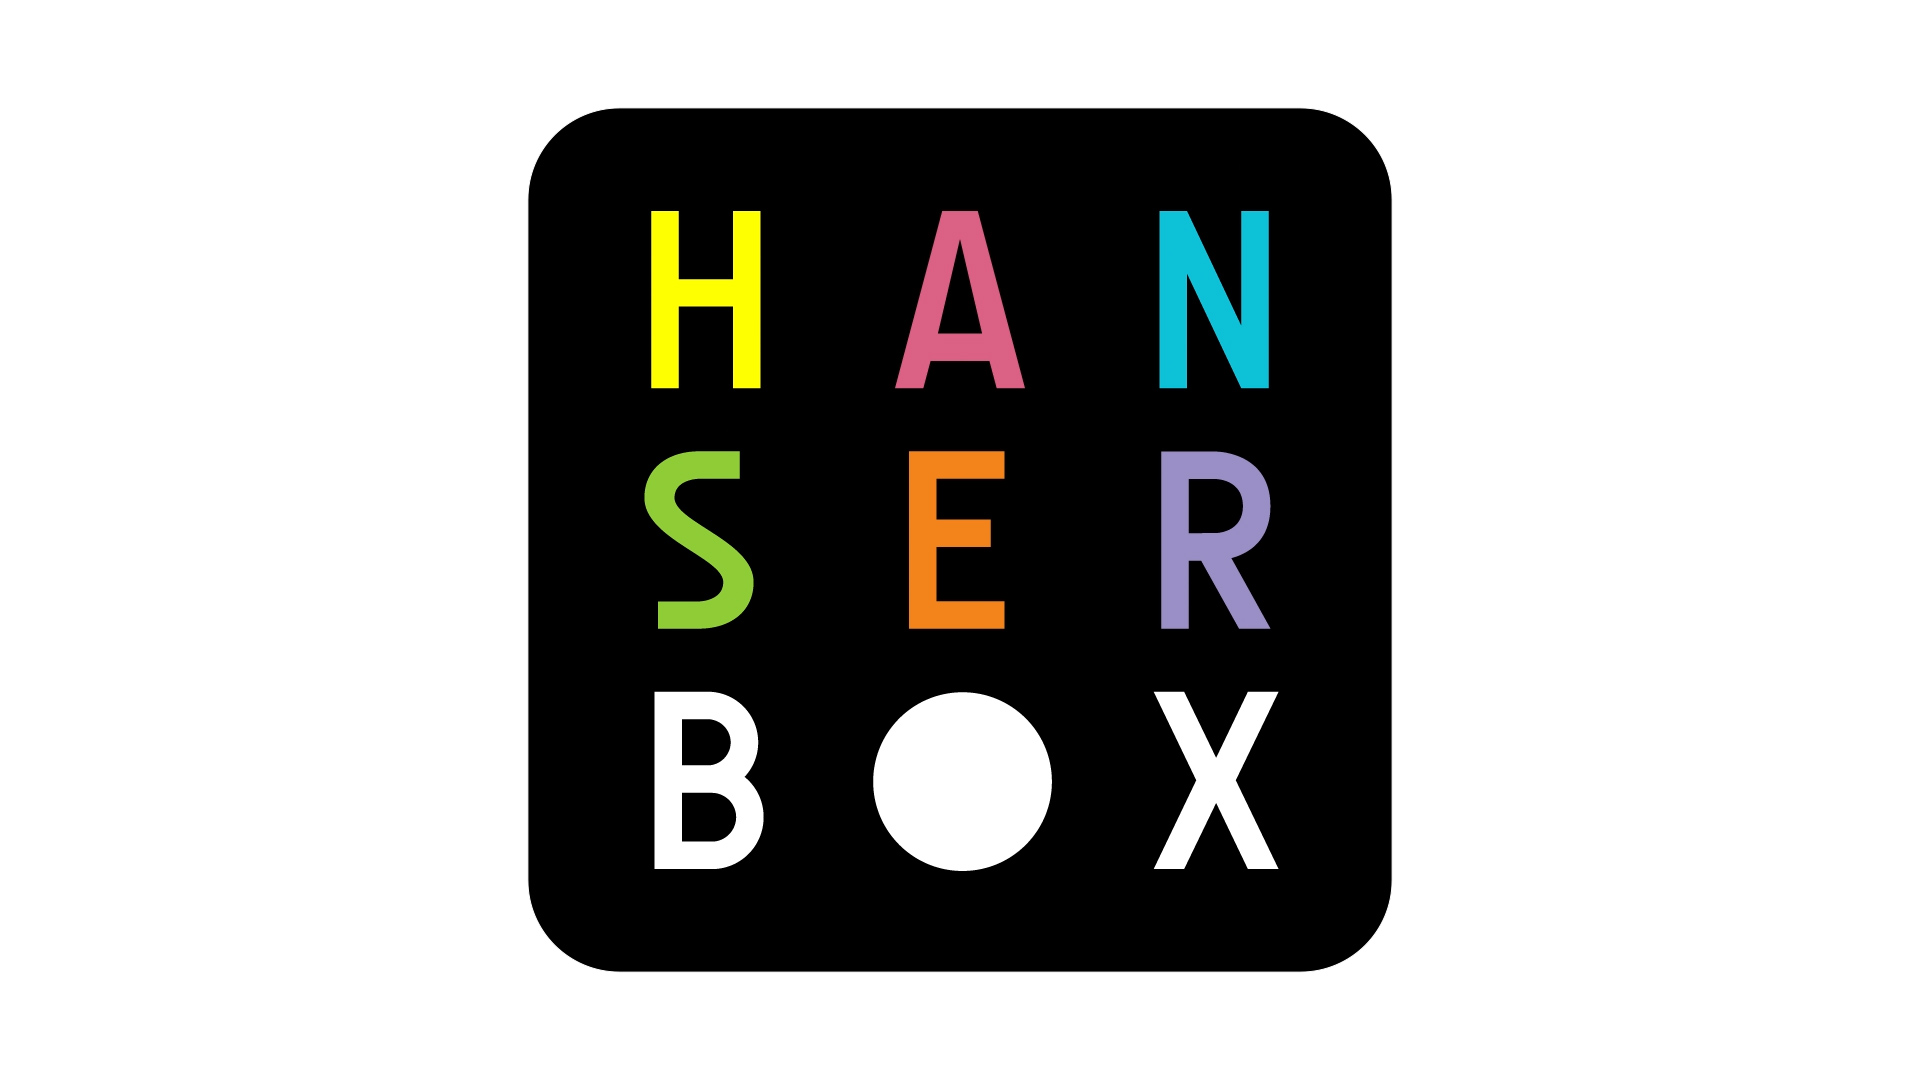 Hanser Box